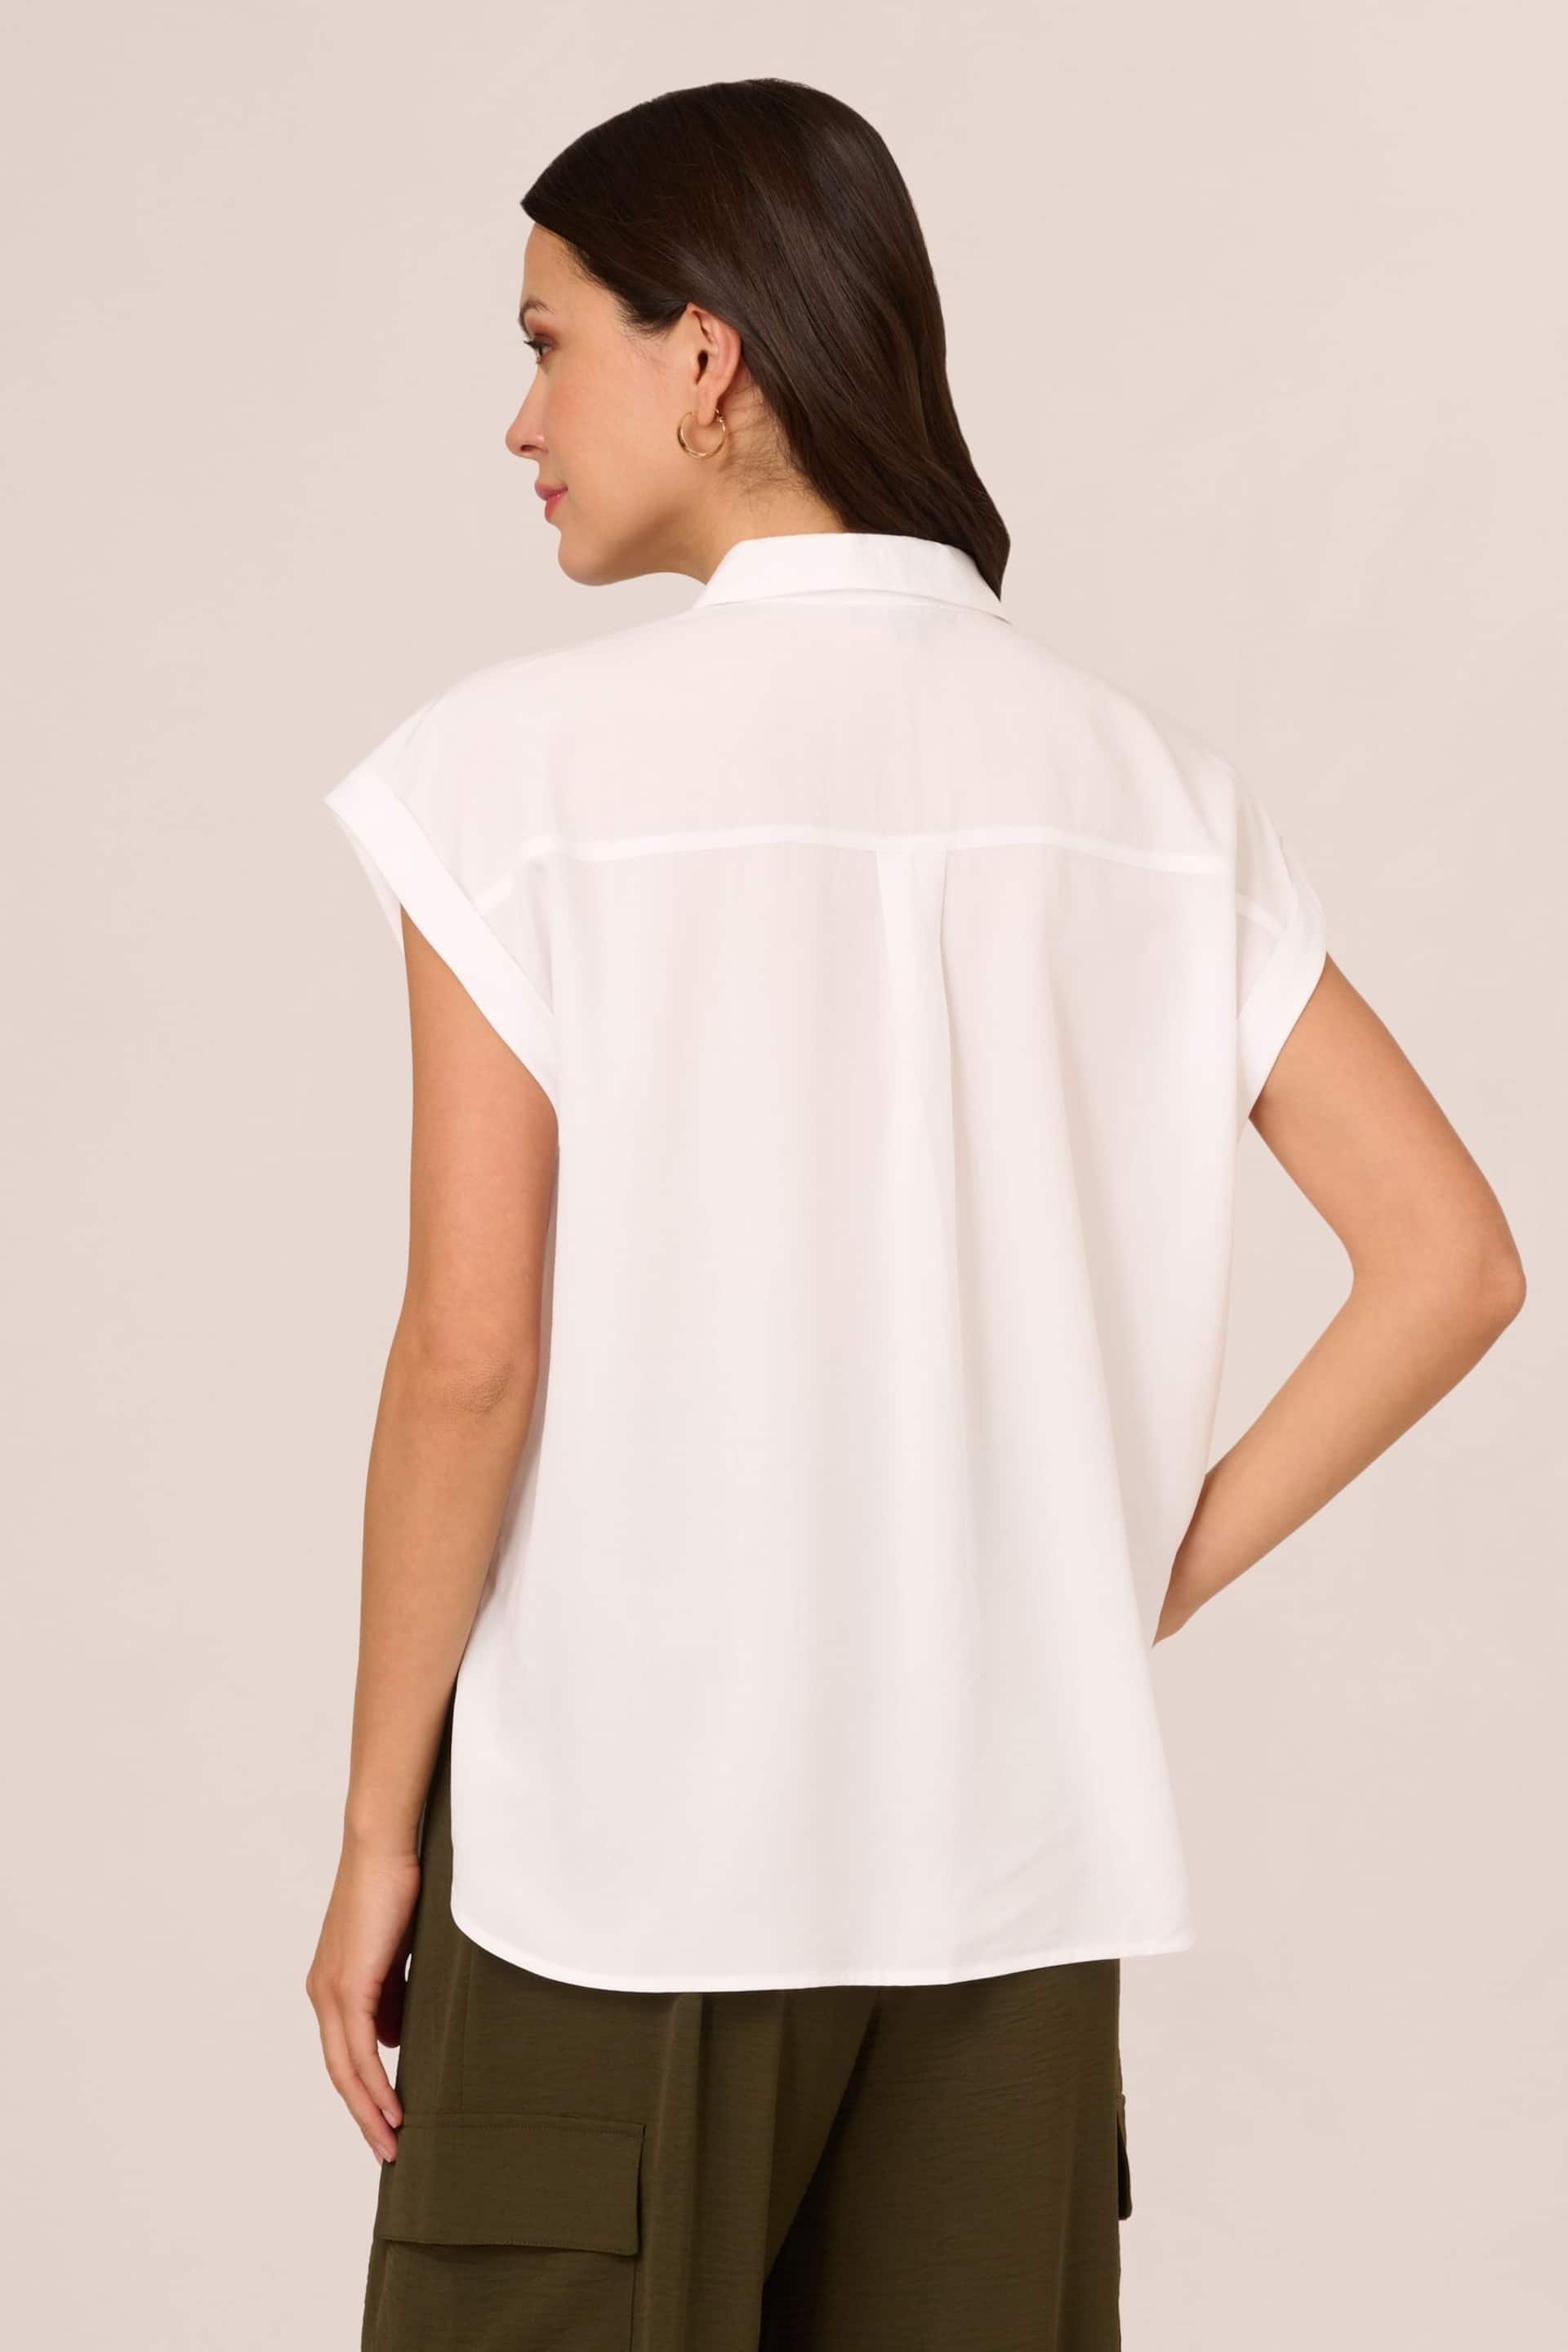 Adrianna Papell Sleeveless Woven Utility White Shirt - Image 2 of 7